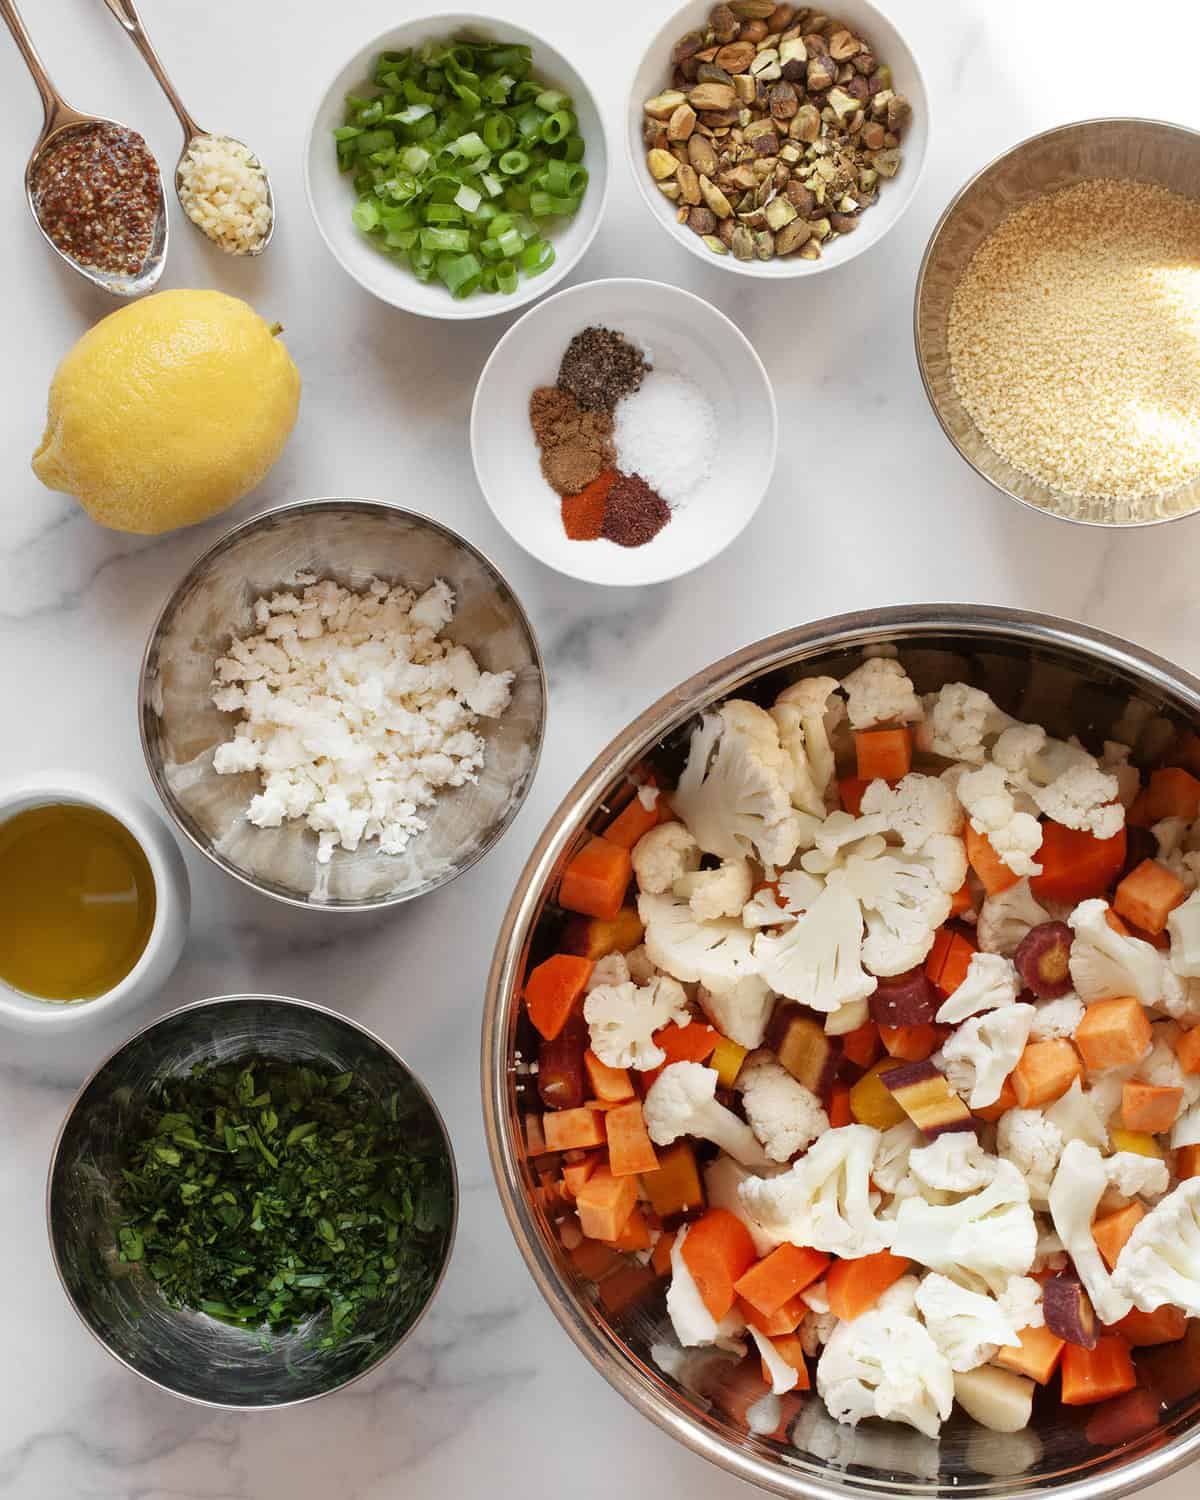 Ingredients including sweet potatoes, cauliflower, carrots, feta, scallions, parsley, pistachios, spices, couscous, lemon and oil.